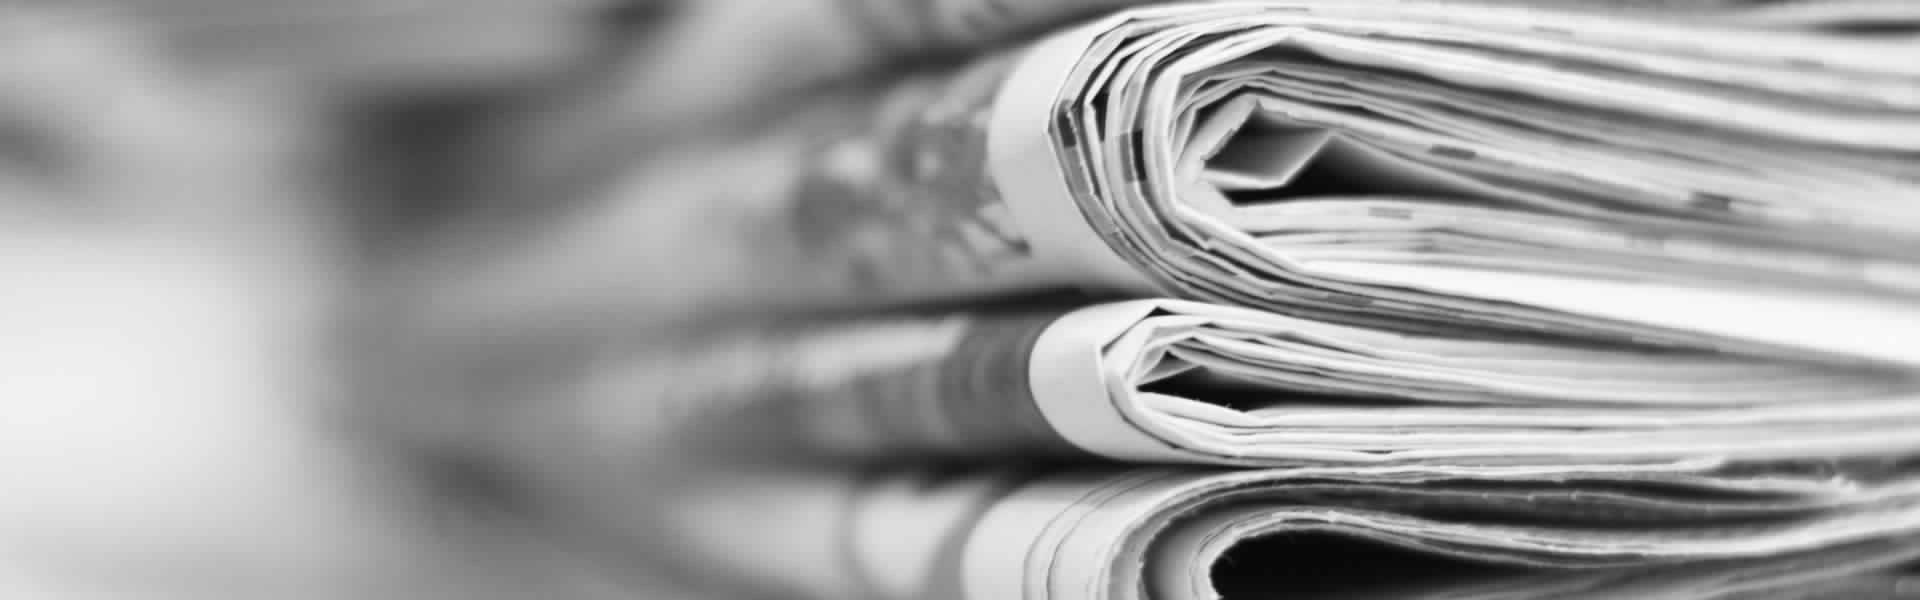 press-releases-at-dalmia-news